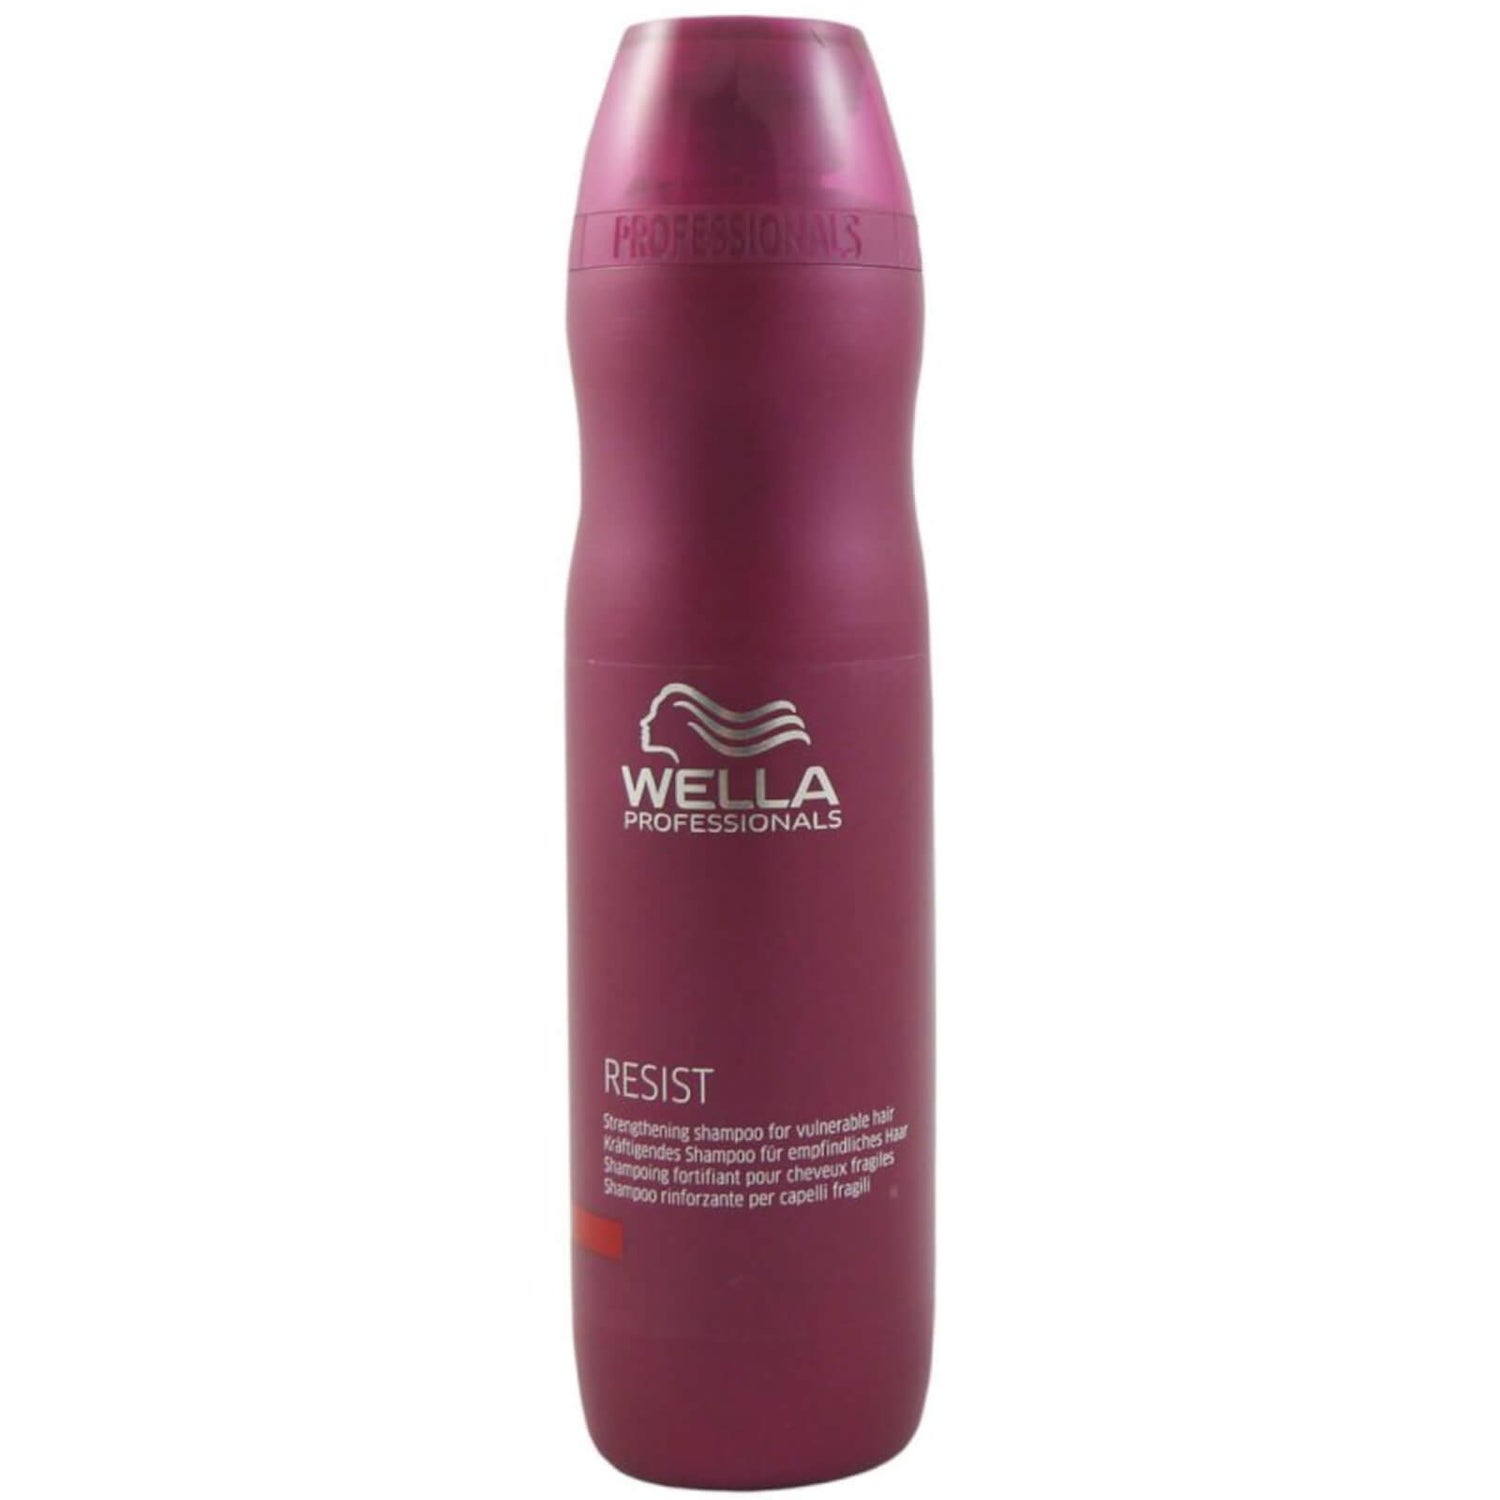 Wella 威娜专业强韧洗发露 - 适合脆弱发质 (250ml)